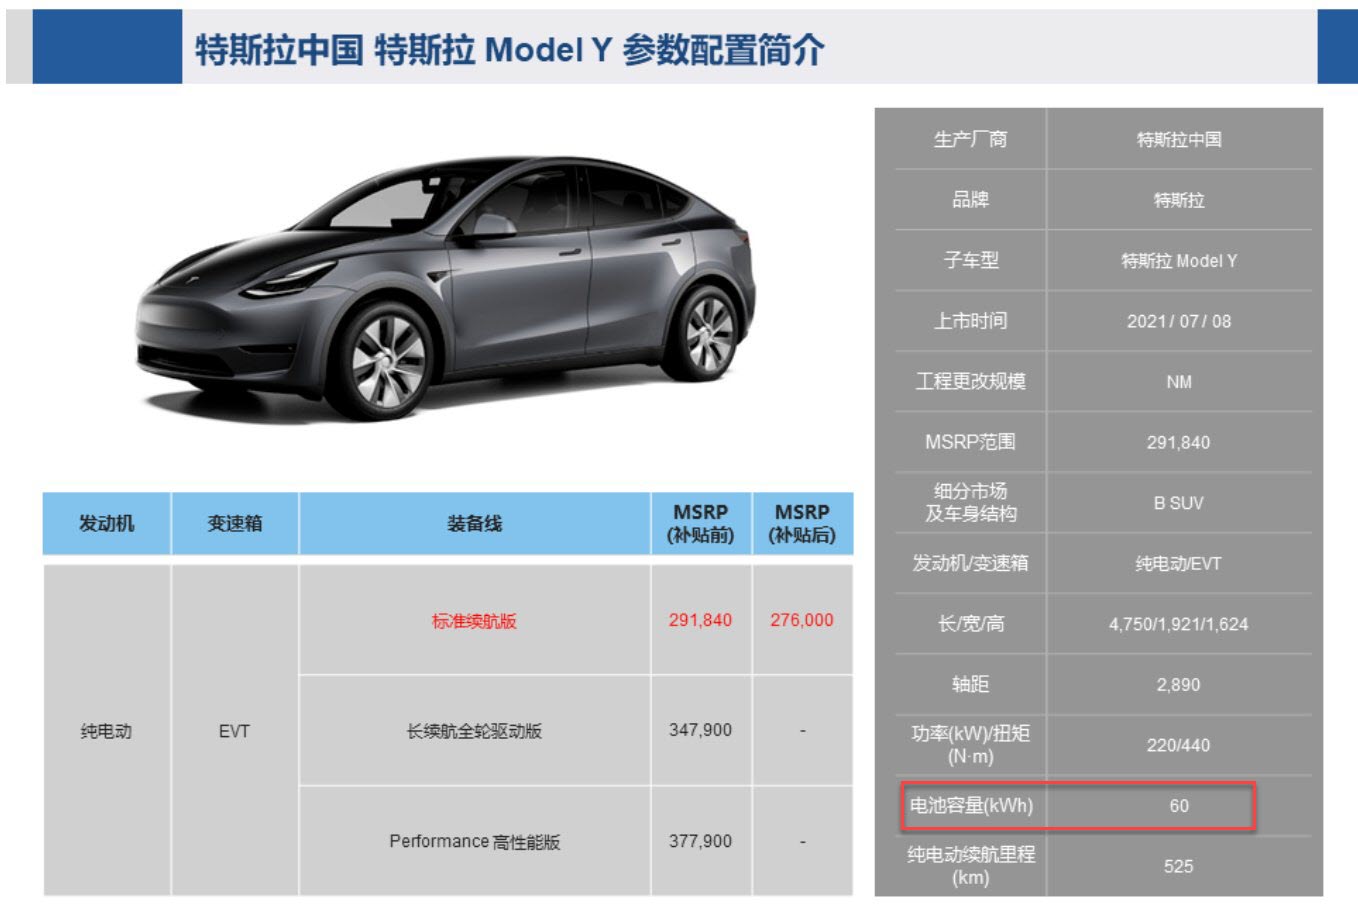 SR Model Y China battery size